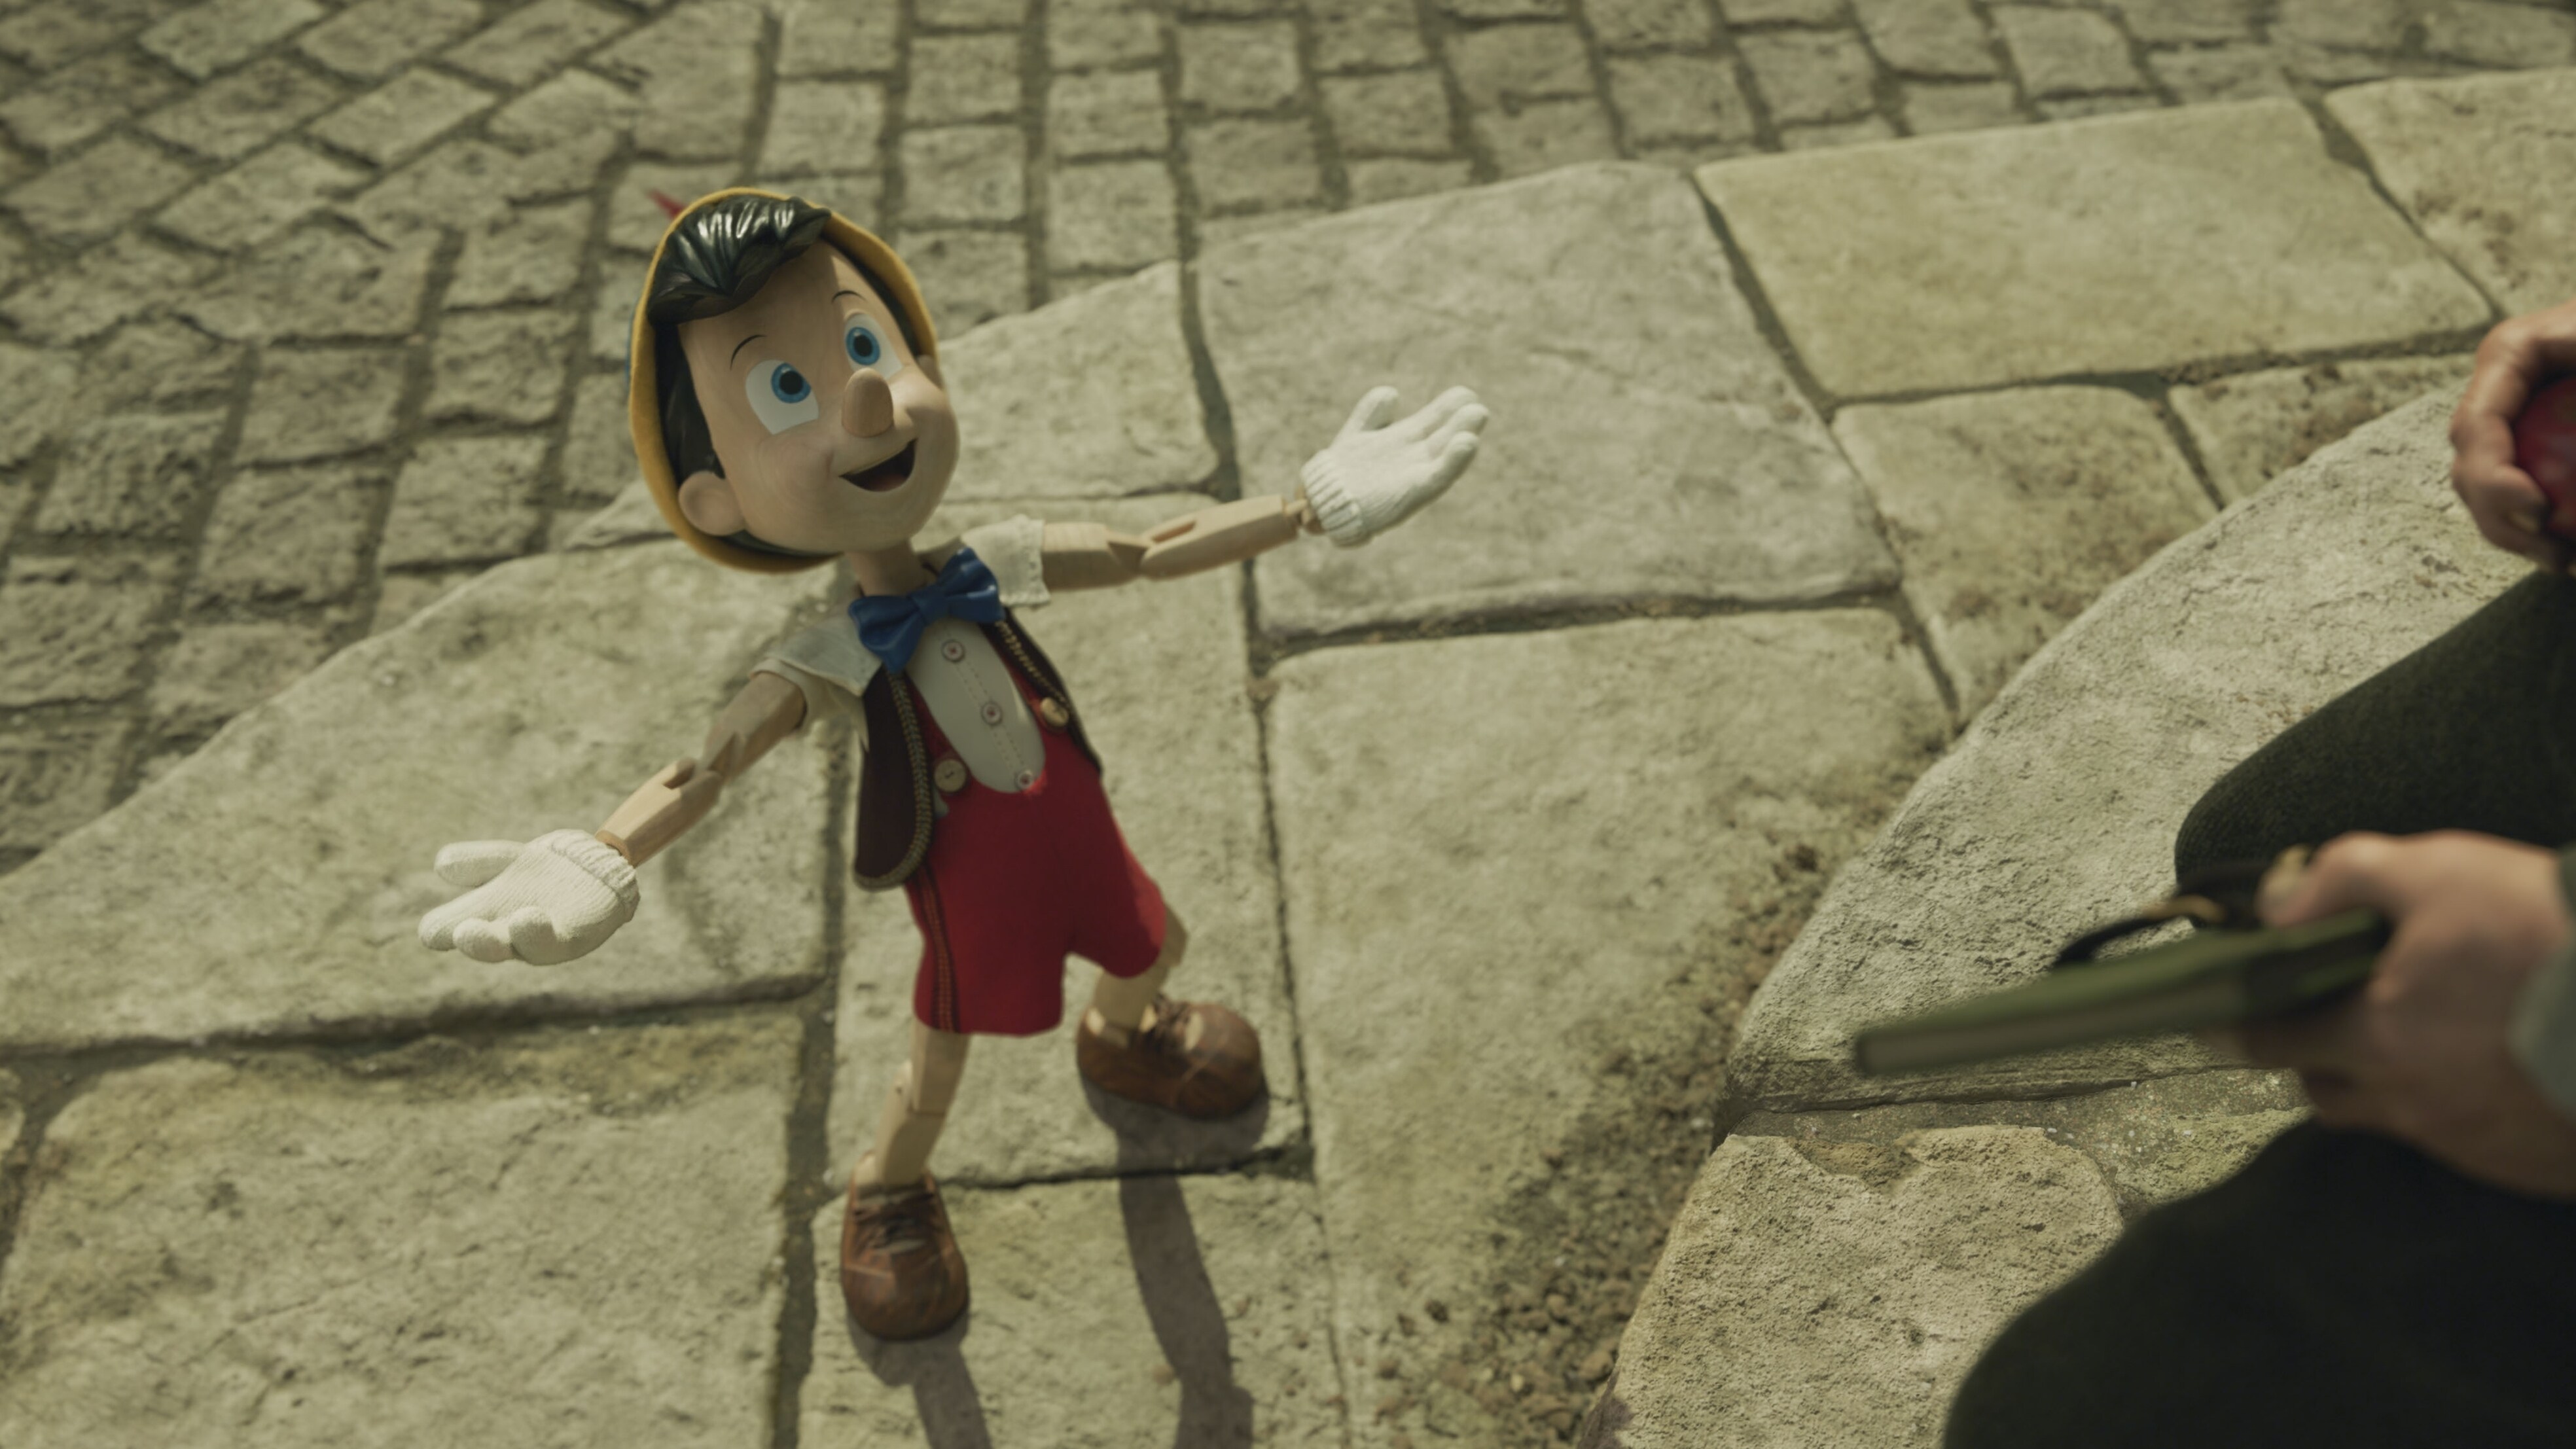 Pinocchio (voiced by Benjamin Evan Ainsworth) in Disney's live-action PINOCCHIO, exclusively on Disney+. Photo courtesy of Disney Enterprises, Inc. © 2022 Disney Enterprises, Inc. All Rights Reserved.